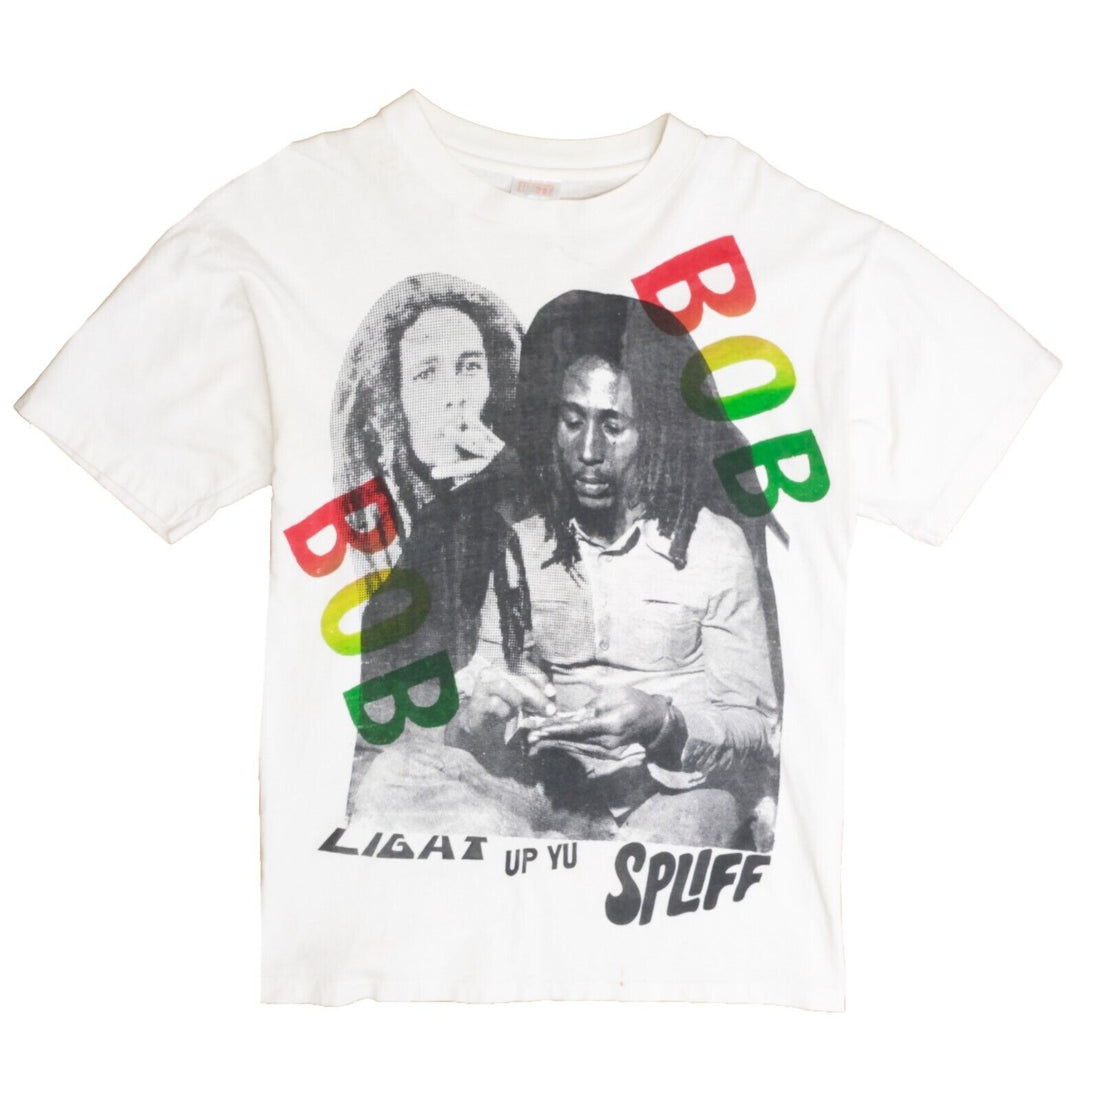 Vintage Bob Marley Light Up Yu Spliff T-Shirt Size Large White Rasta Jamaica 90s